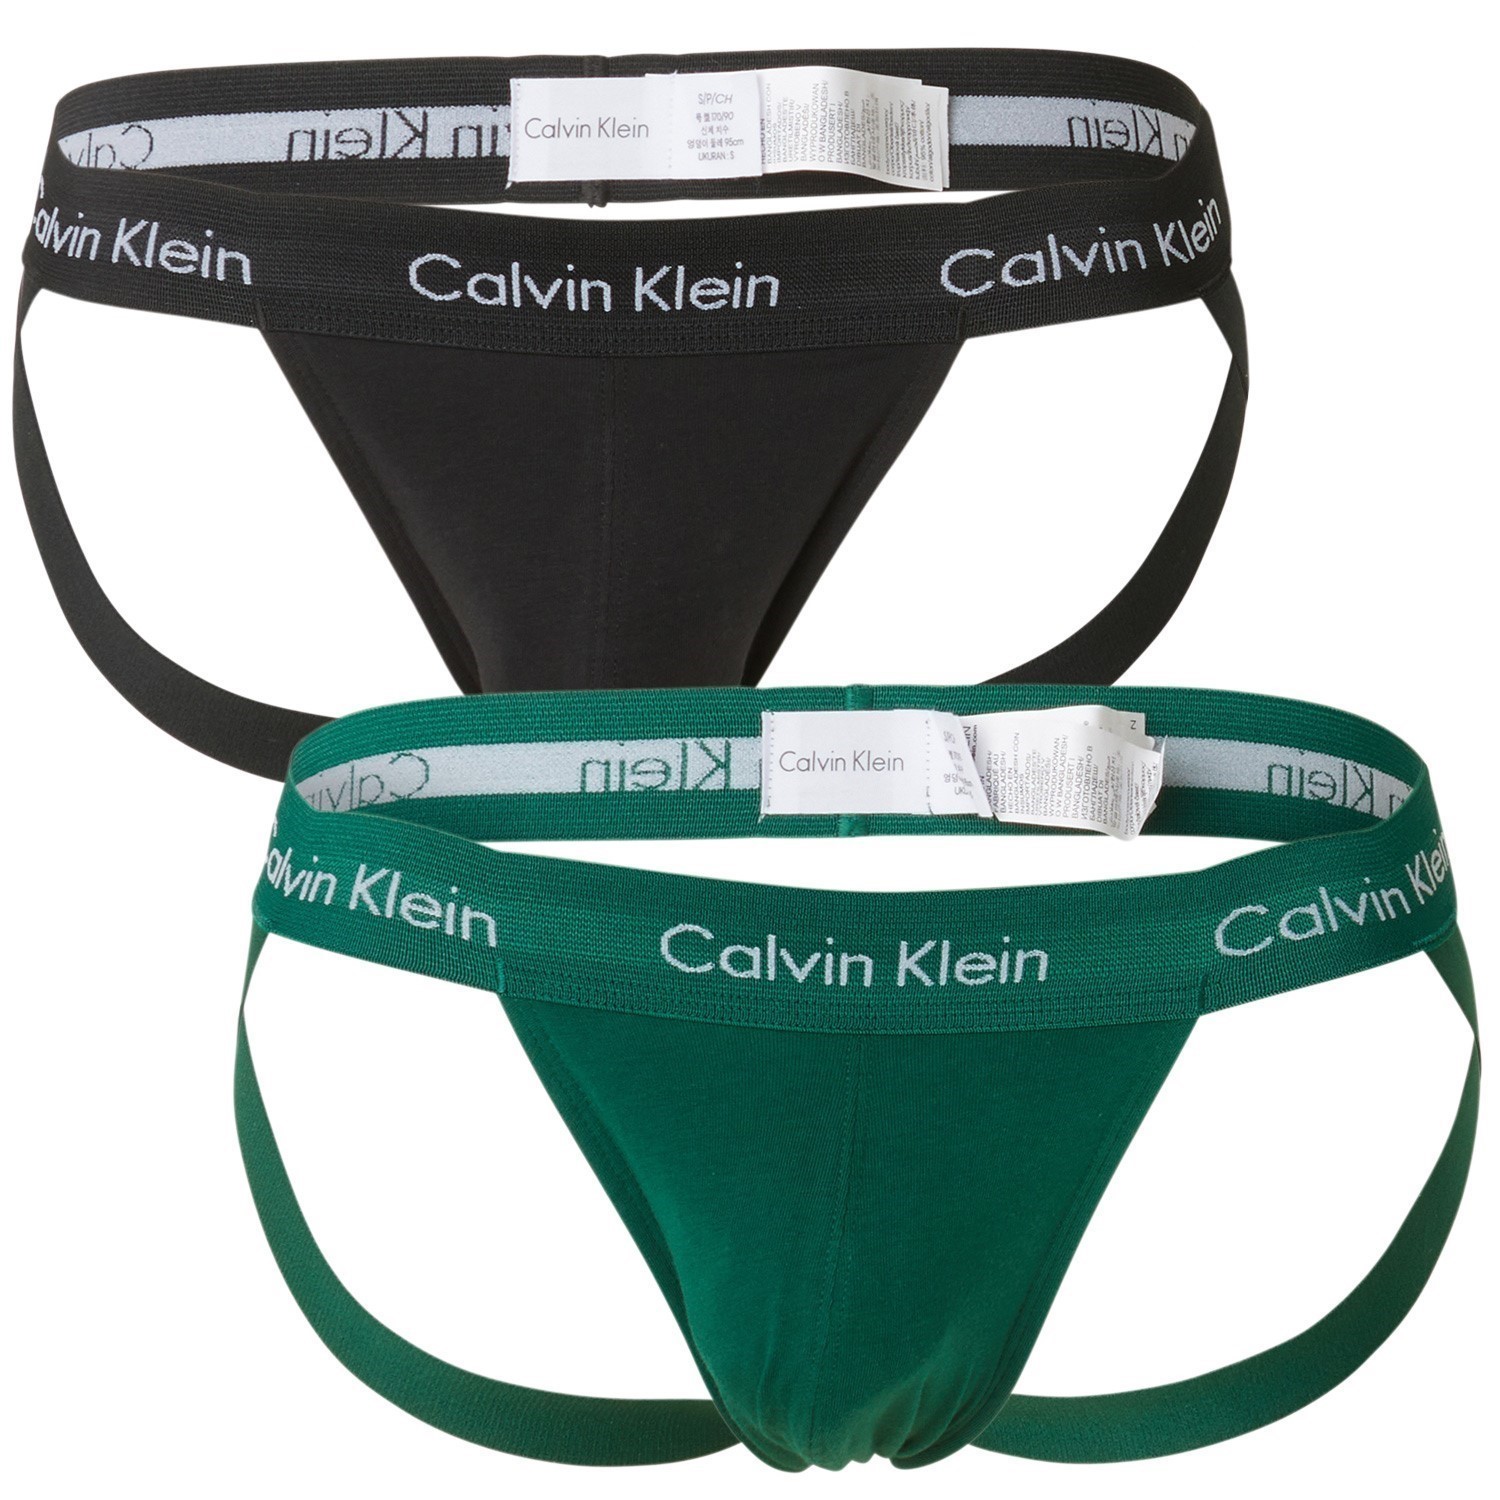 2-Pack Calvin Klein Cotton Stretch Jockstrap - Jockstrap - Trunks